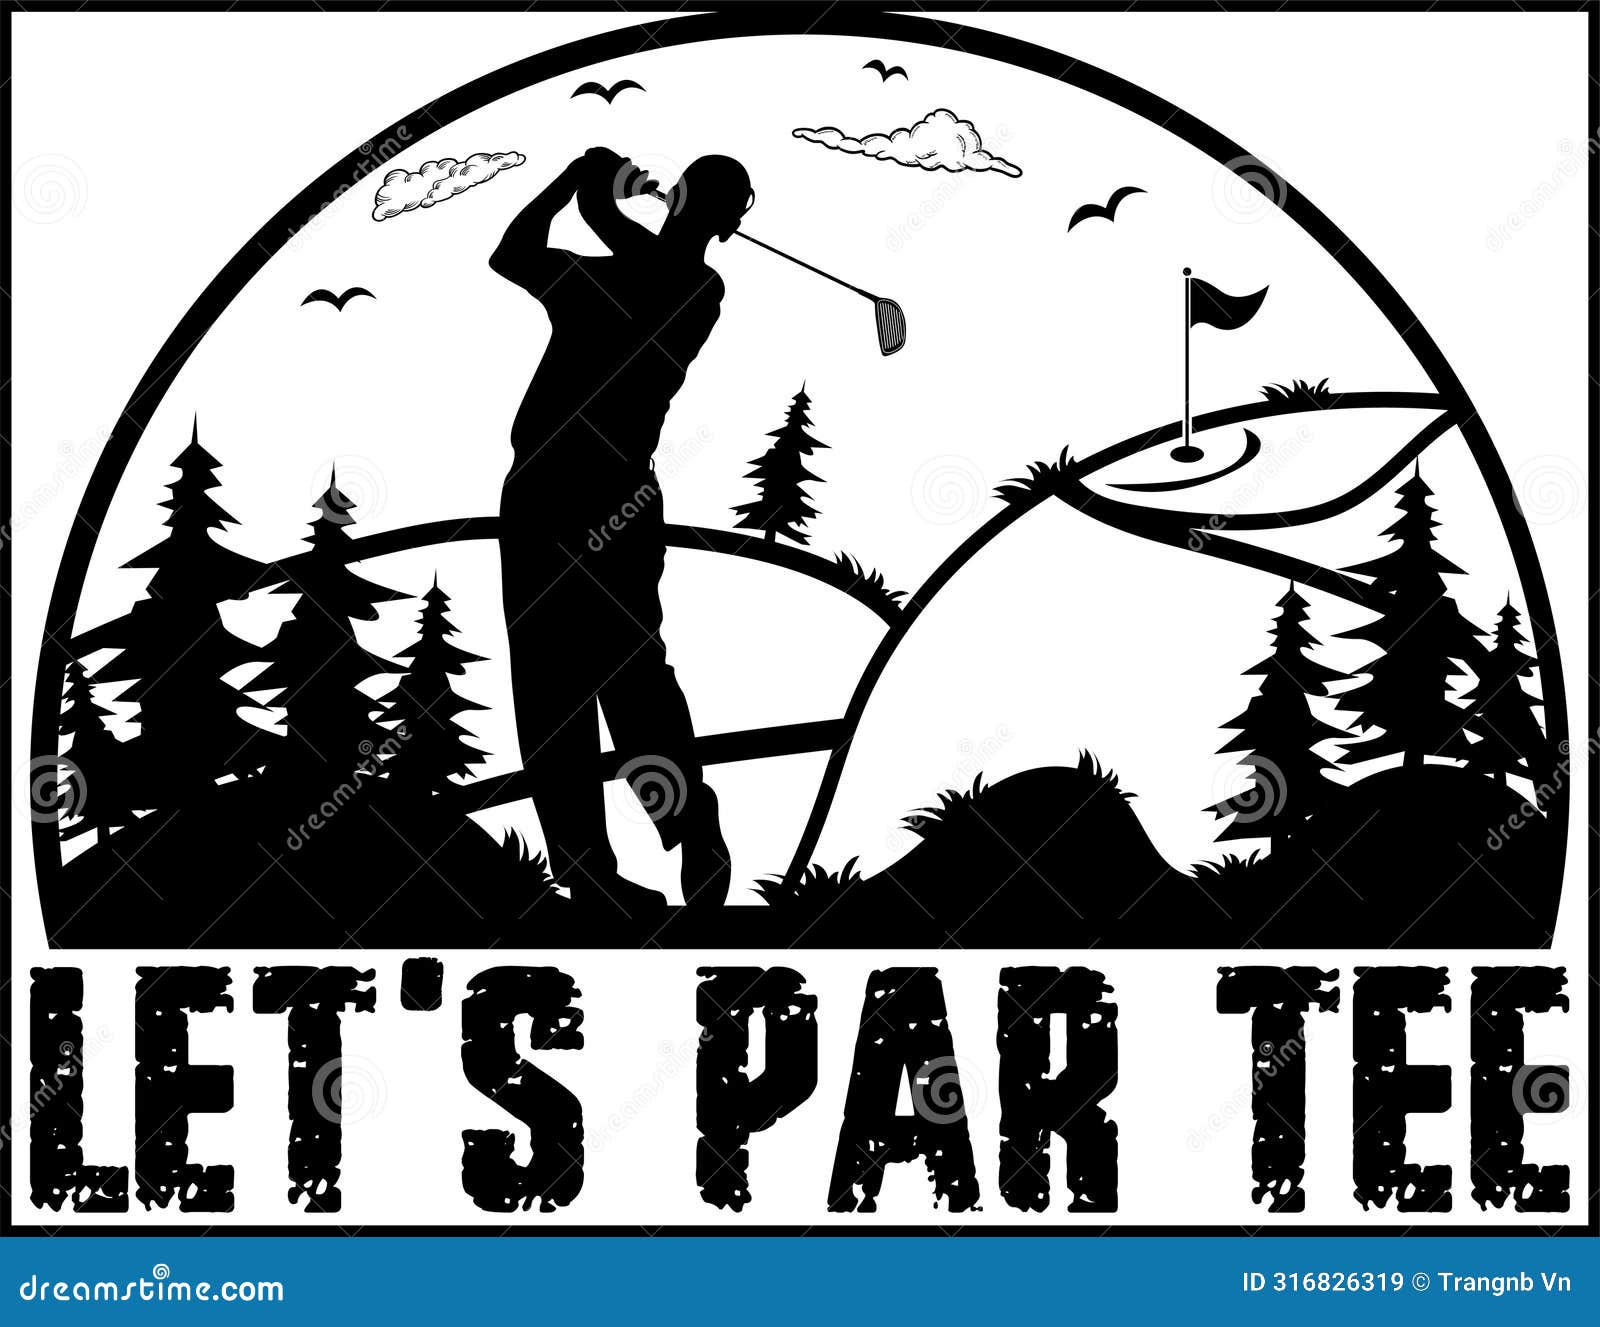 let's par tee, golf team, golf club, golf ball, golf player